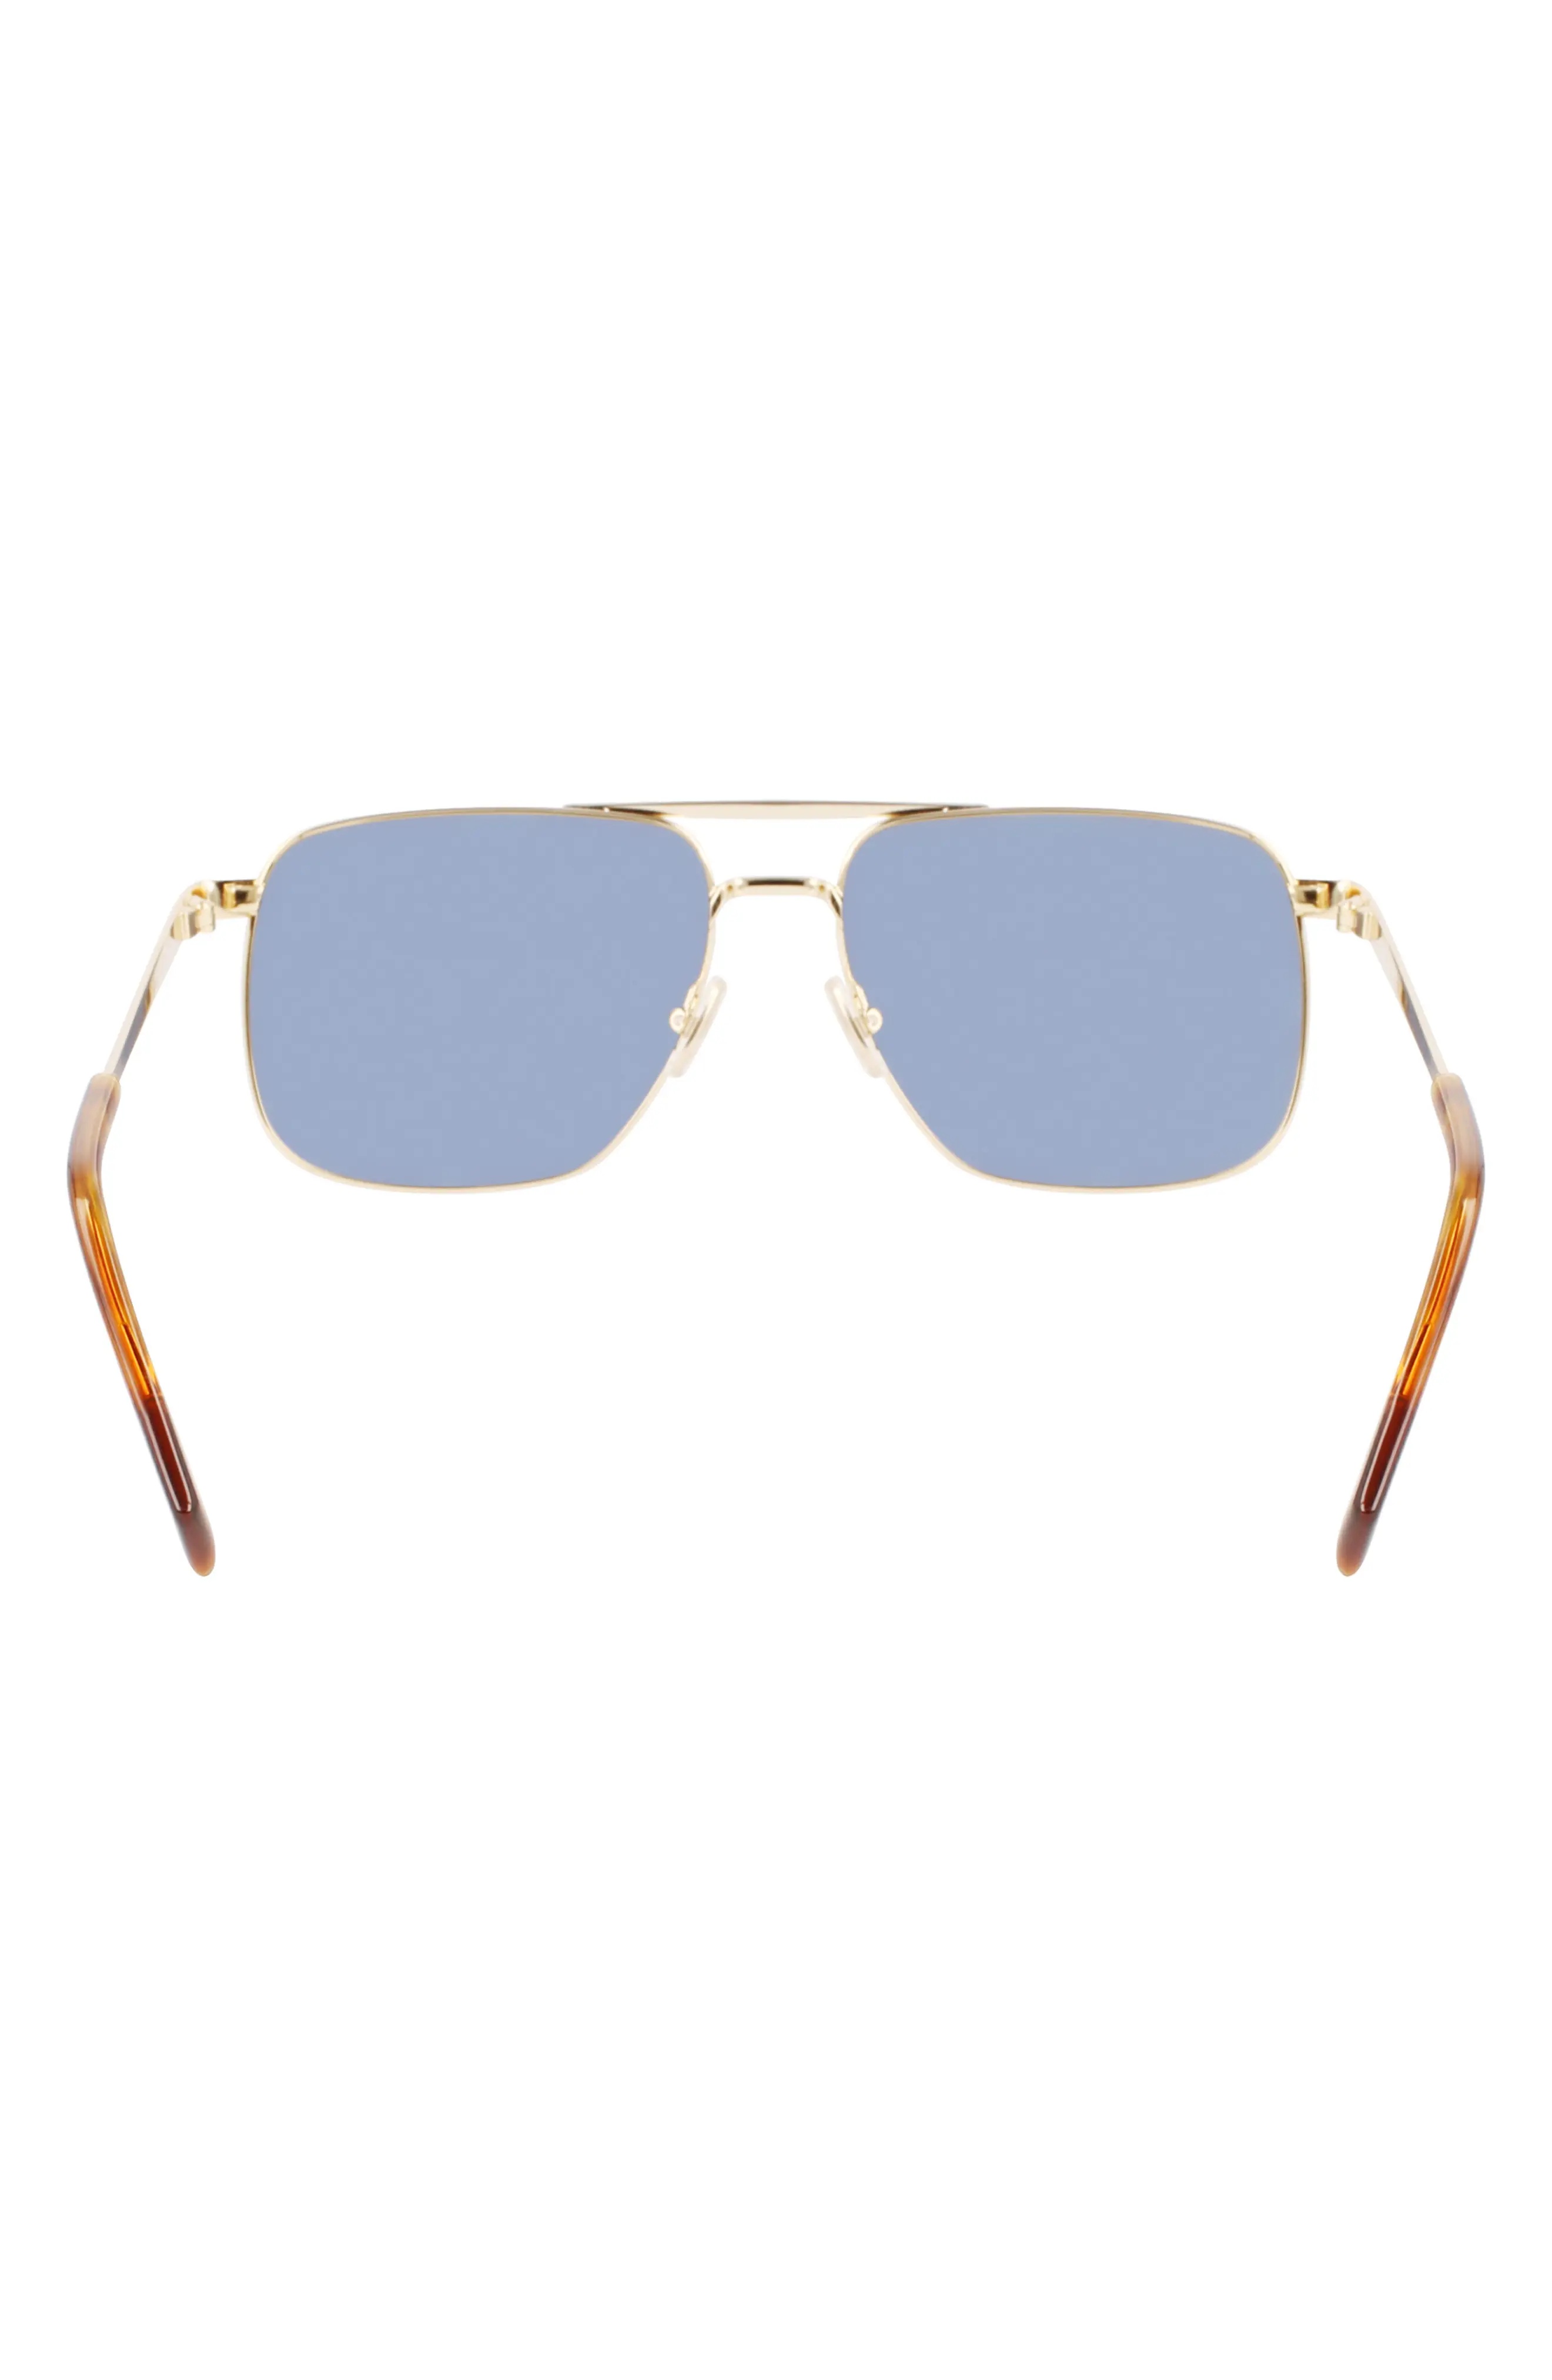 JL 58mm Rectangular Sunglasses in Gold /Blue - 5